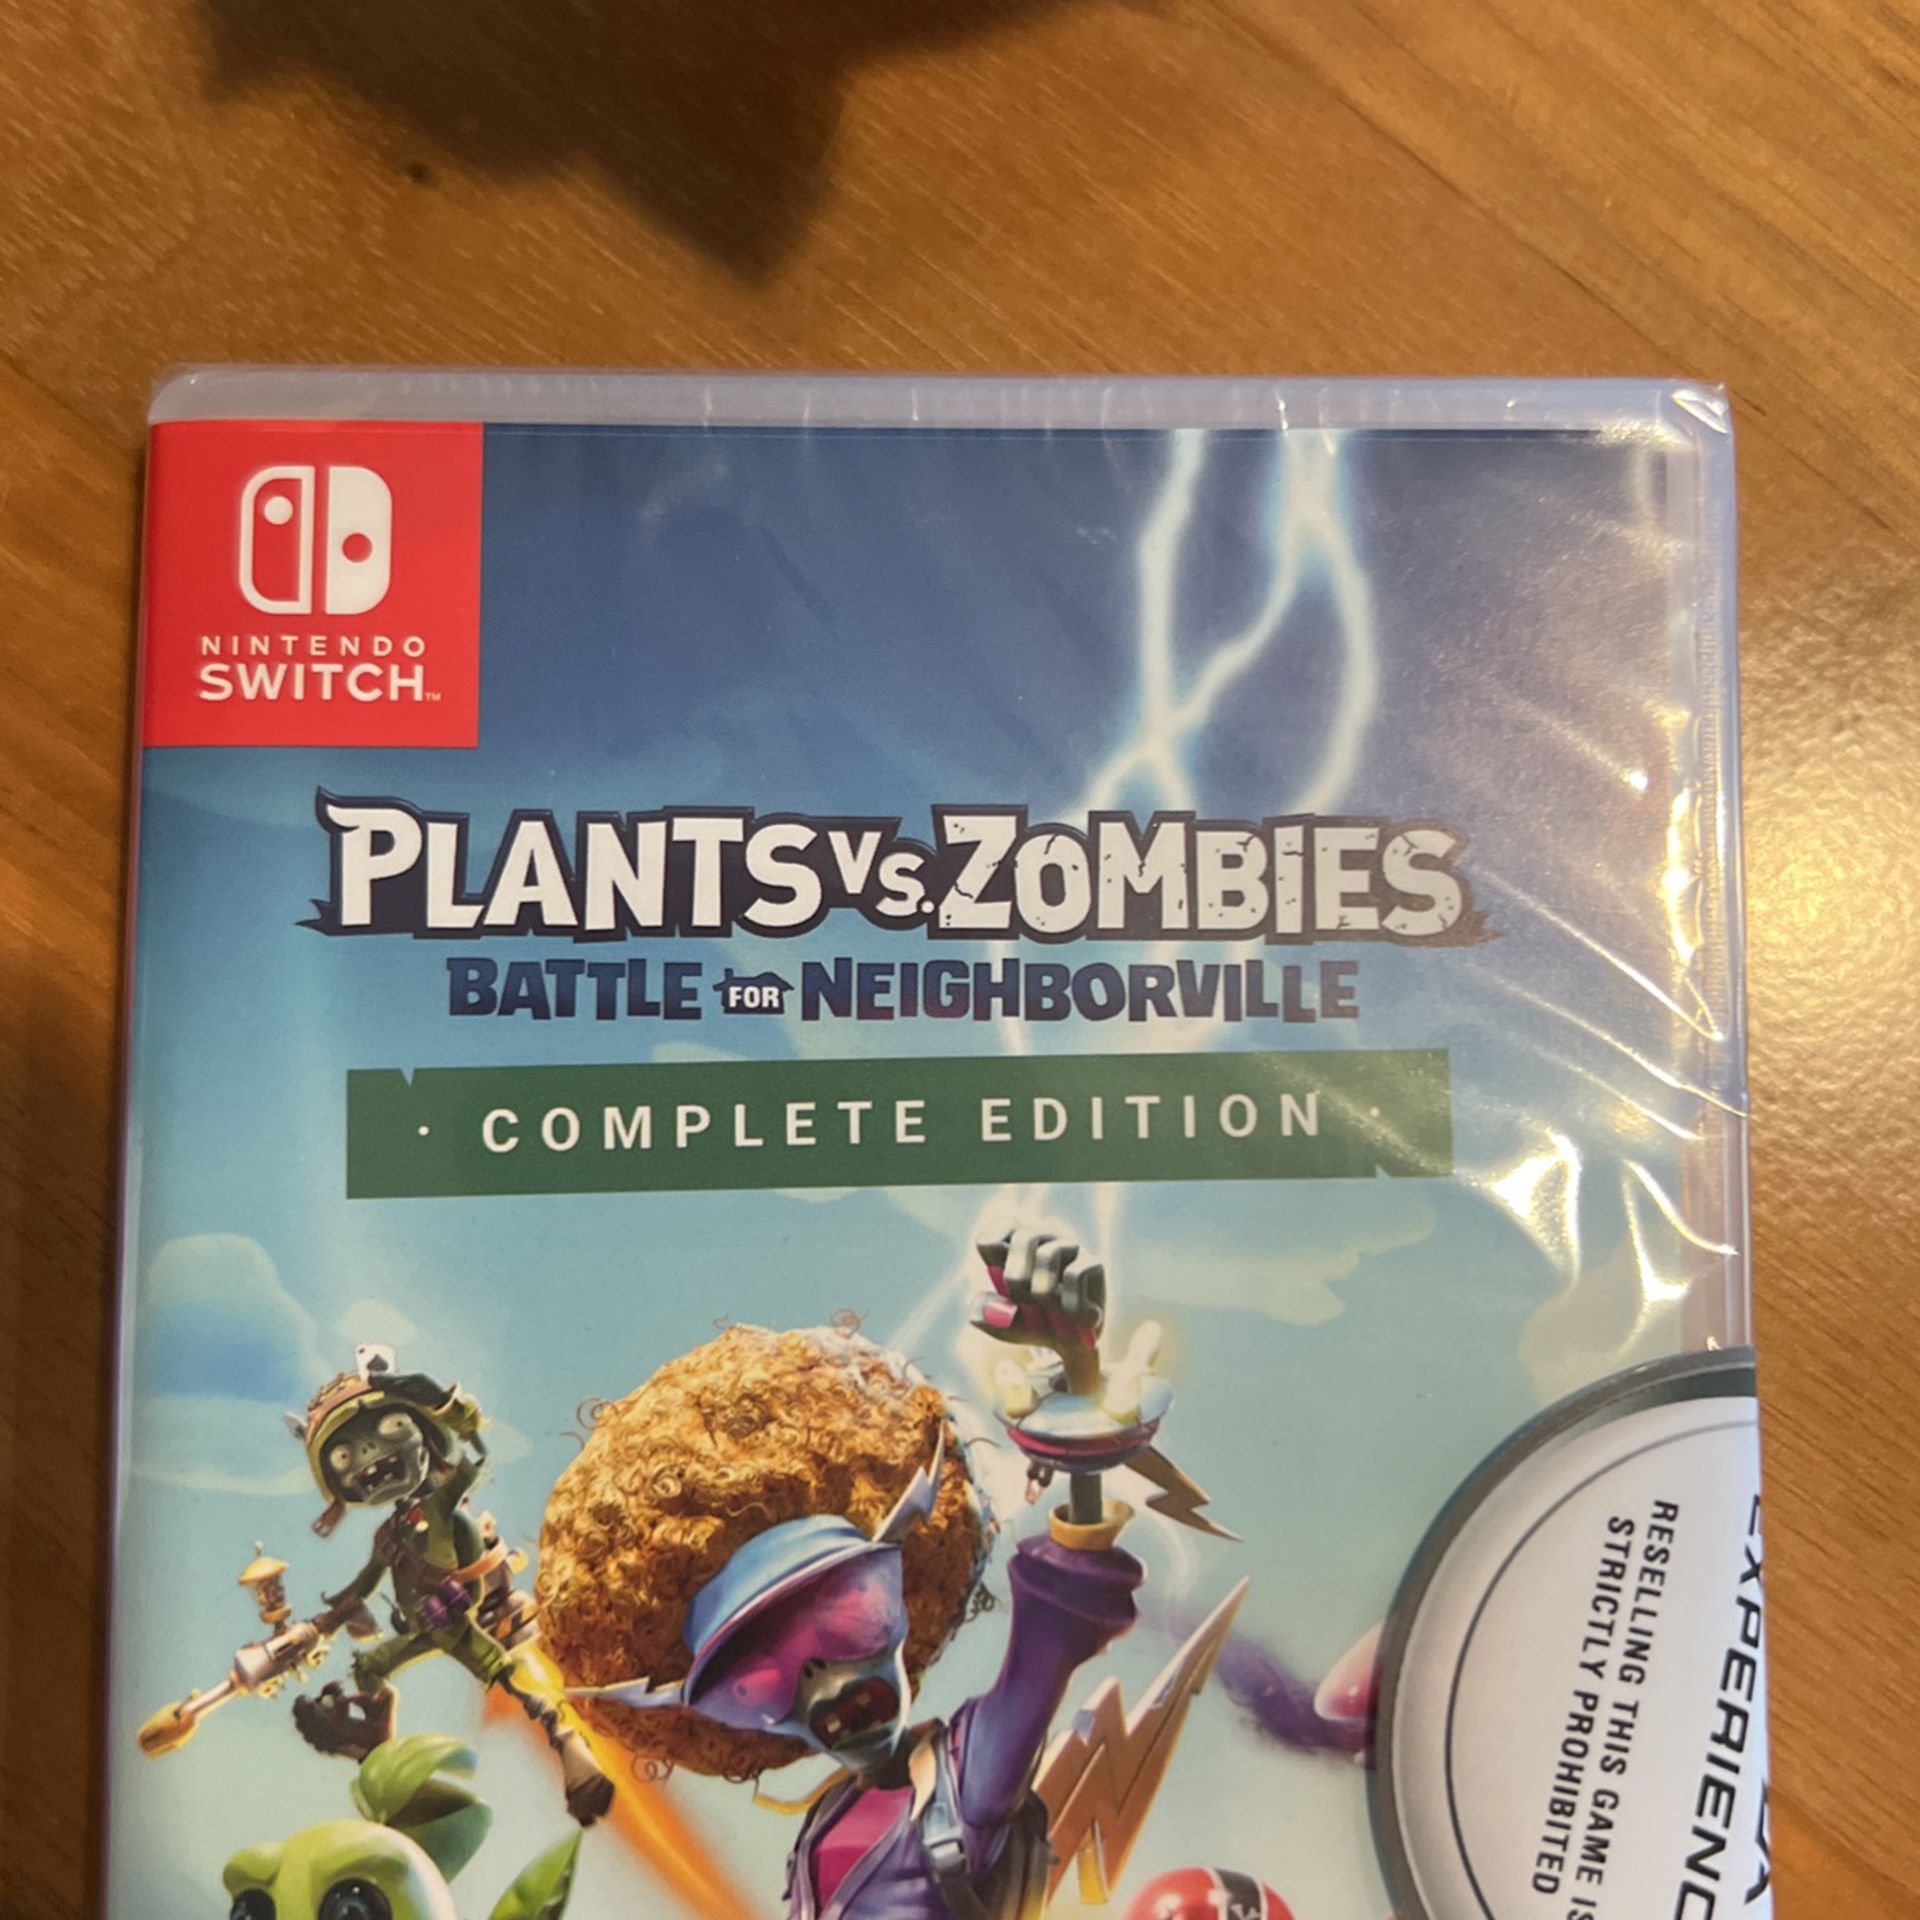 Plants versus zombies battle for neighbor Ville, complete edition